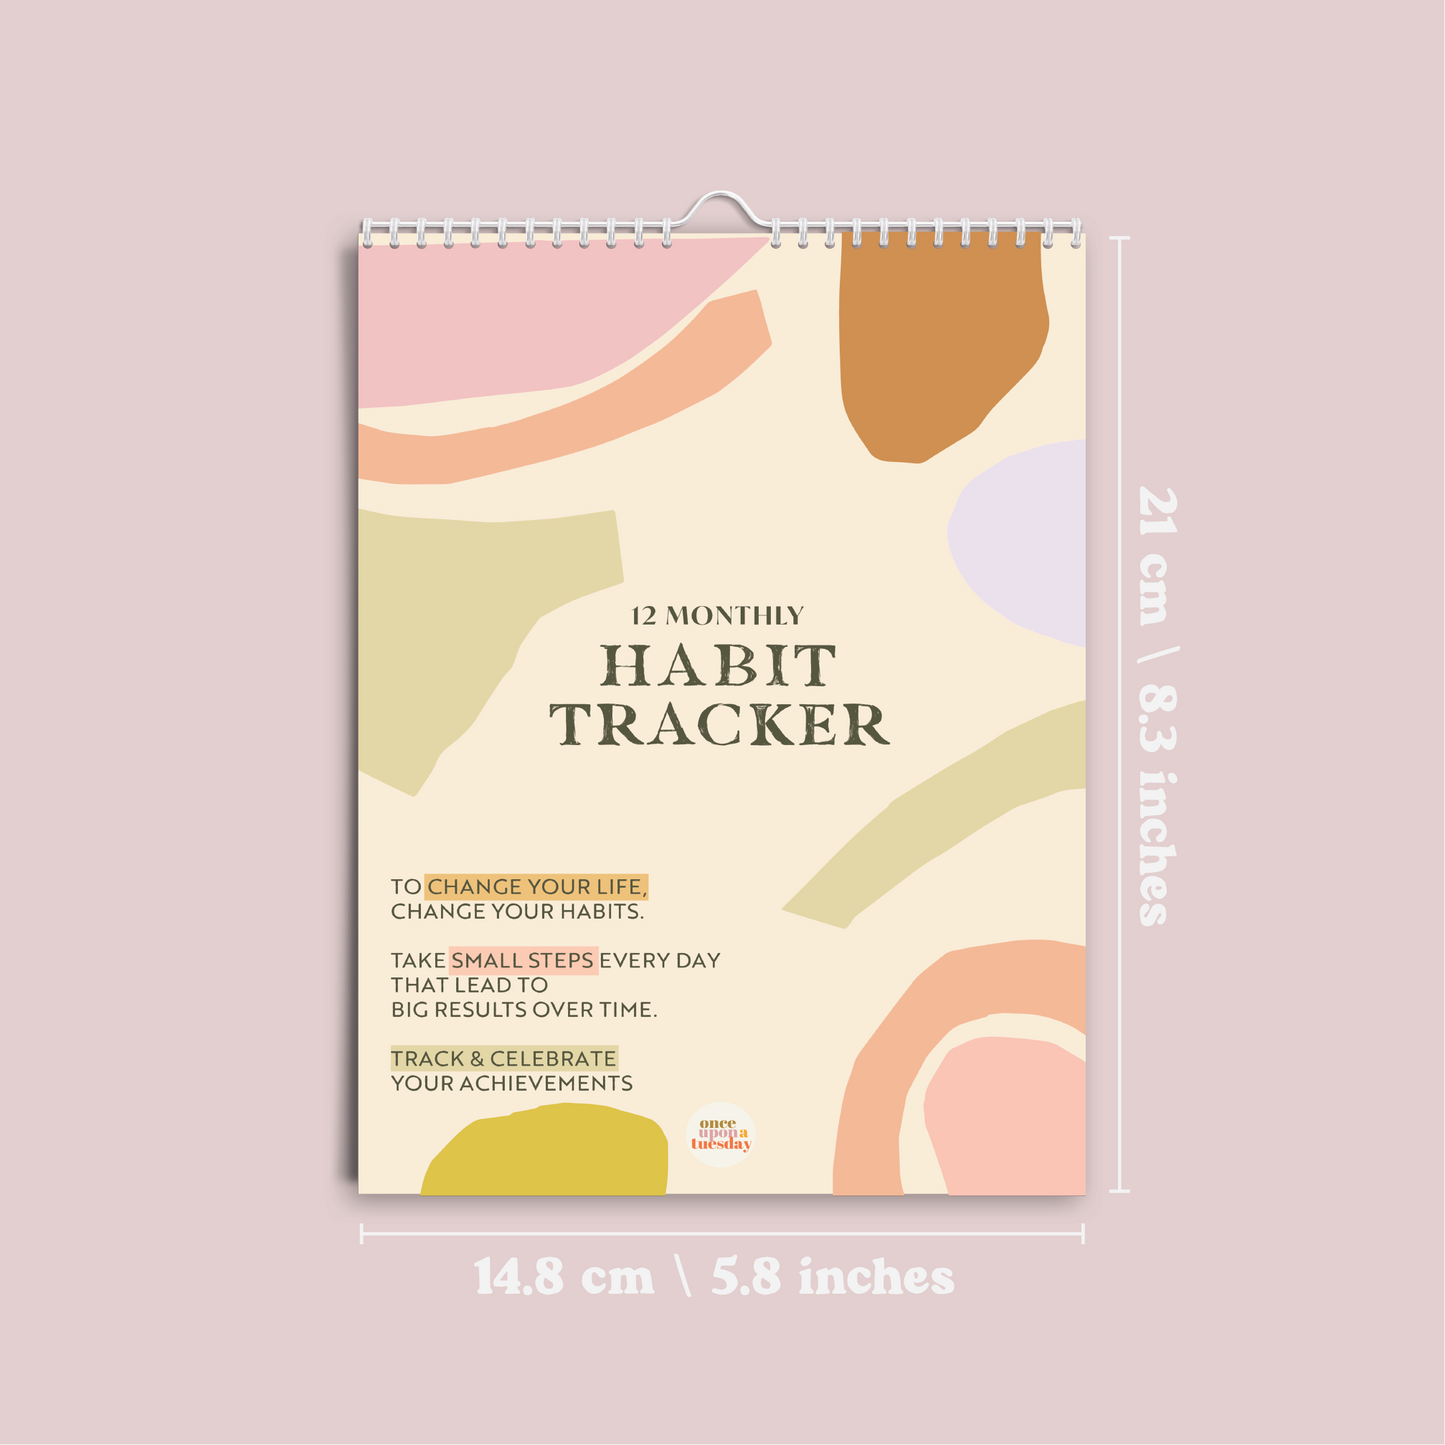 Daily Habit Tracker-12 Month Goal Planner